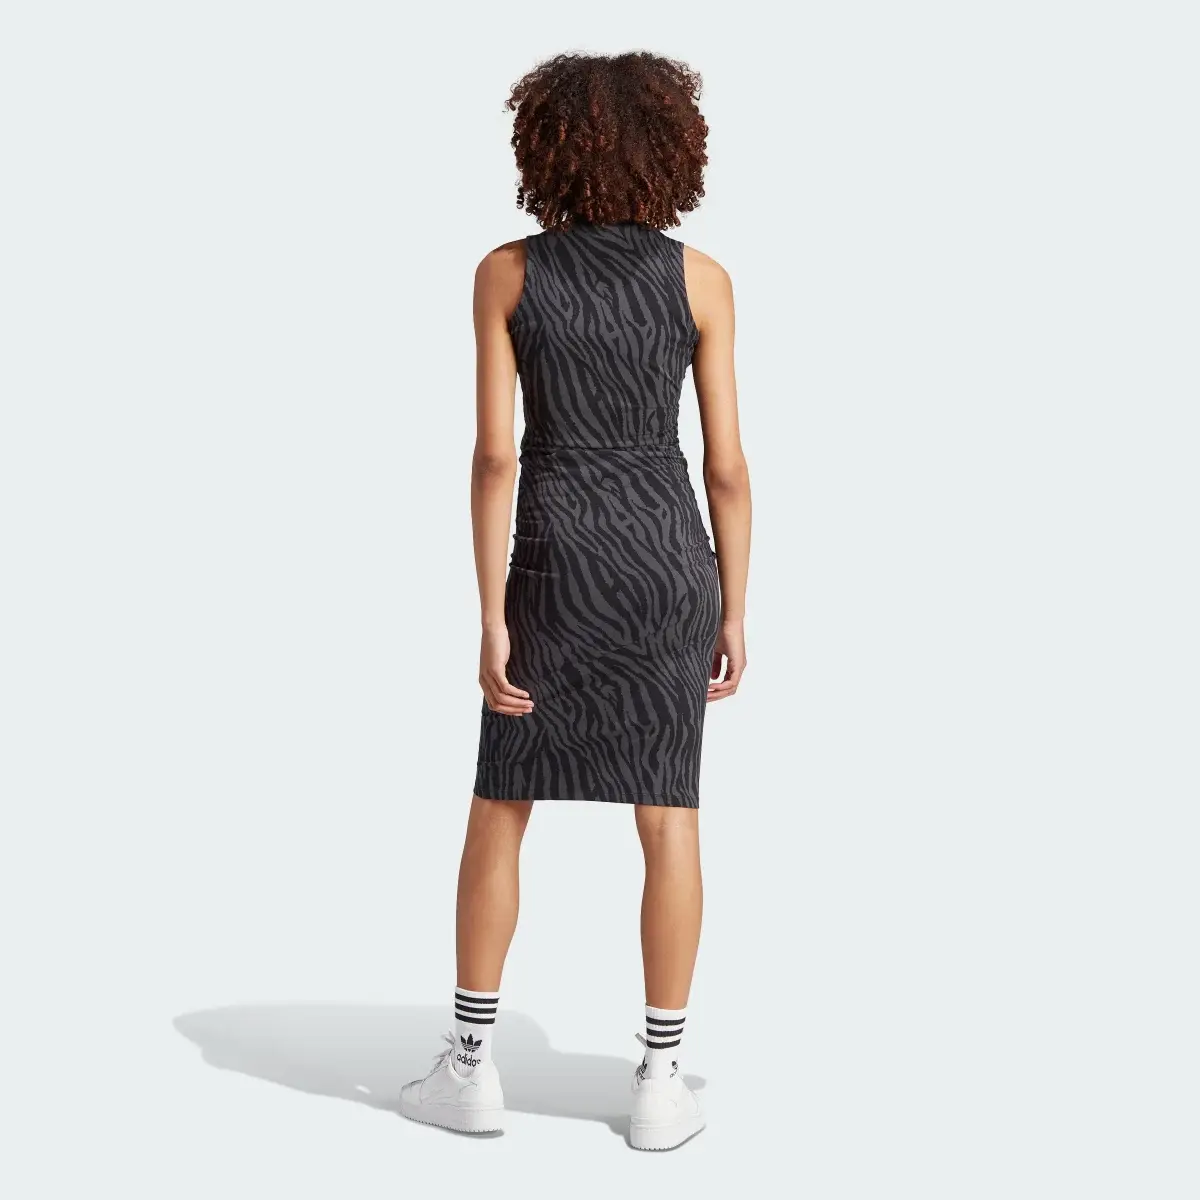 Adidas Allover Zebra Animal Print Dress. 3